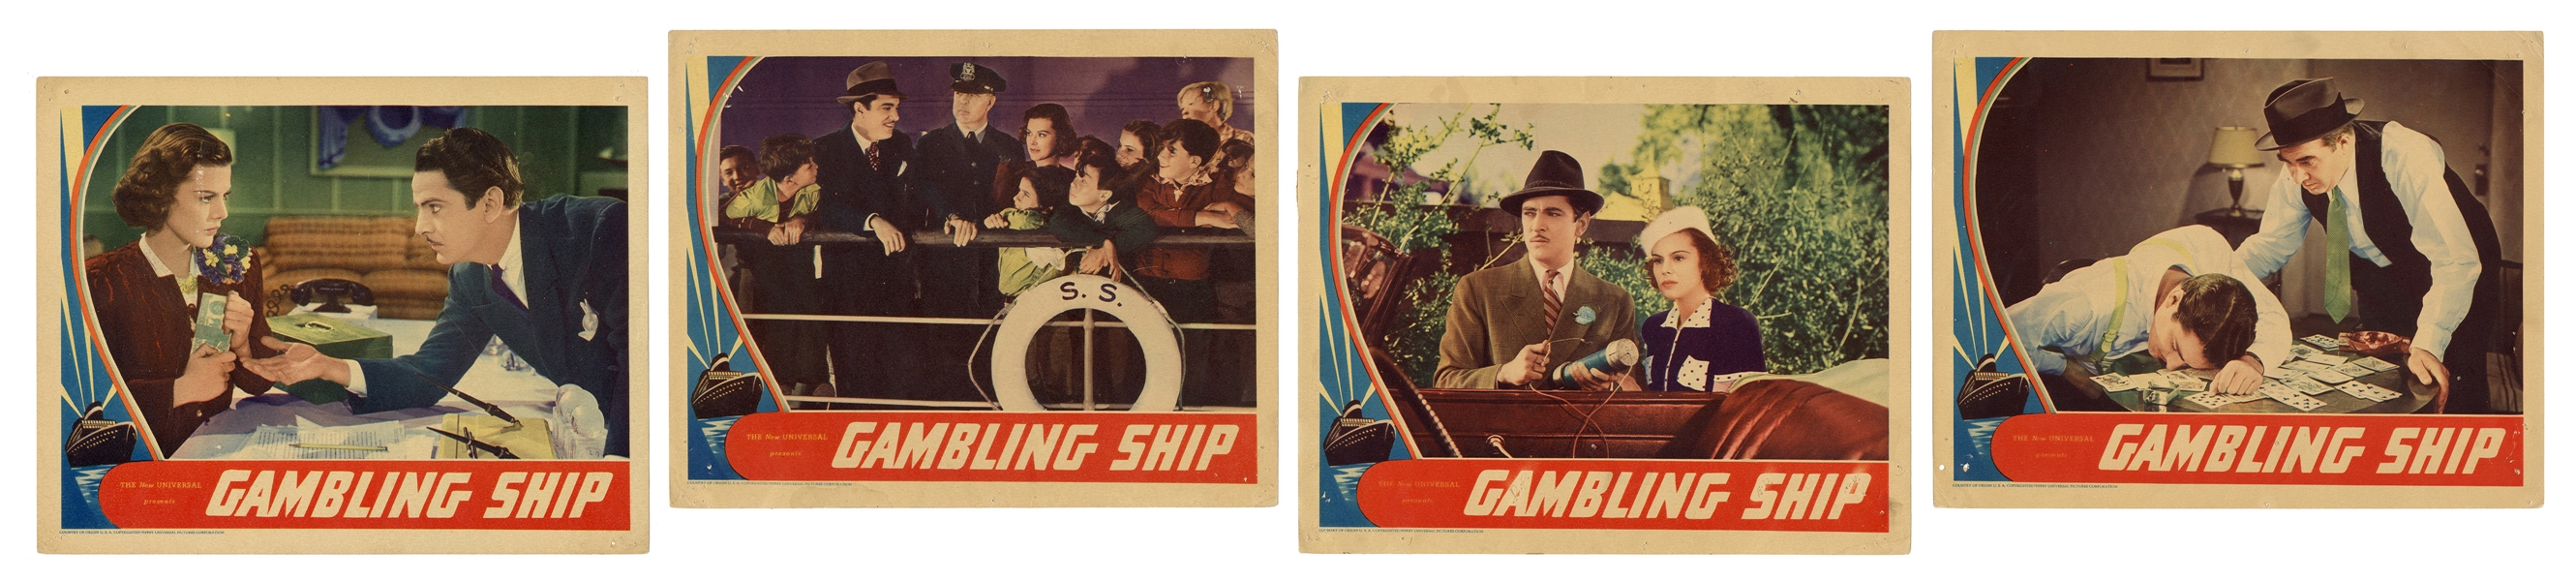  Gambling Ship. Lobby Card Group (5). New Universal, 1938/39...